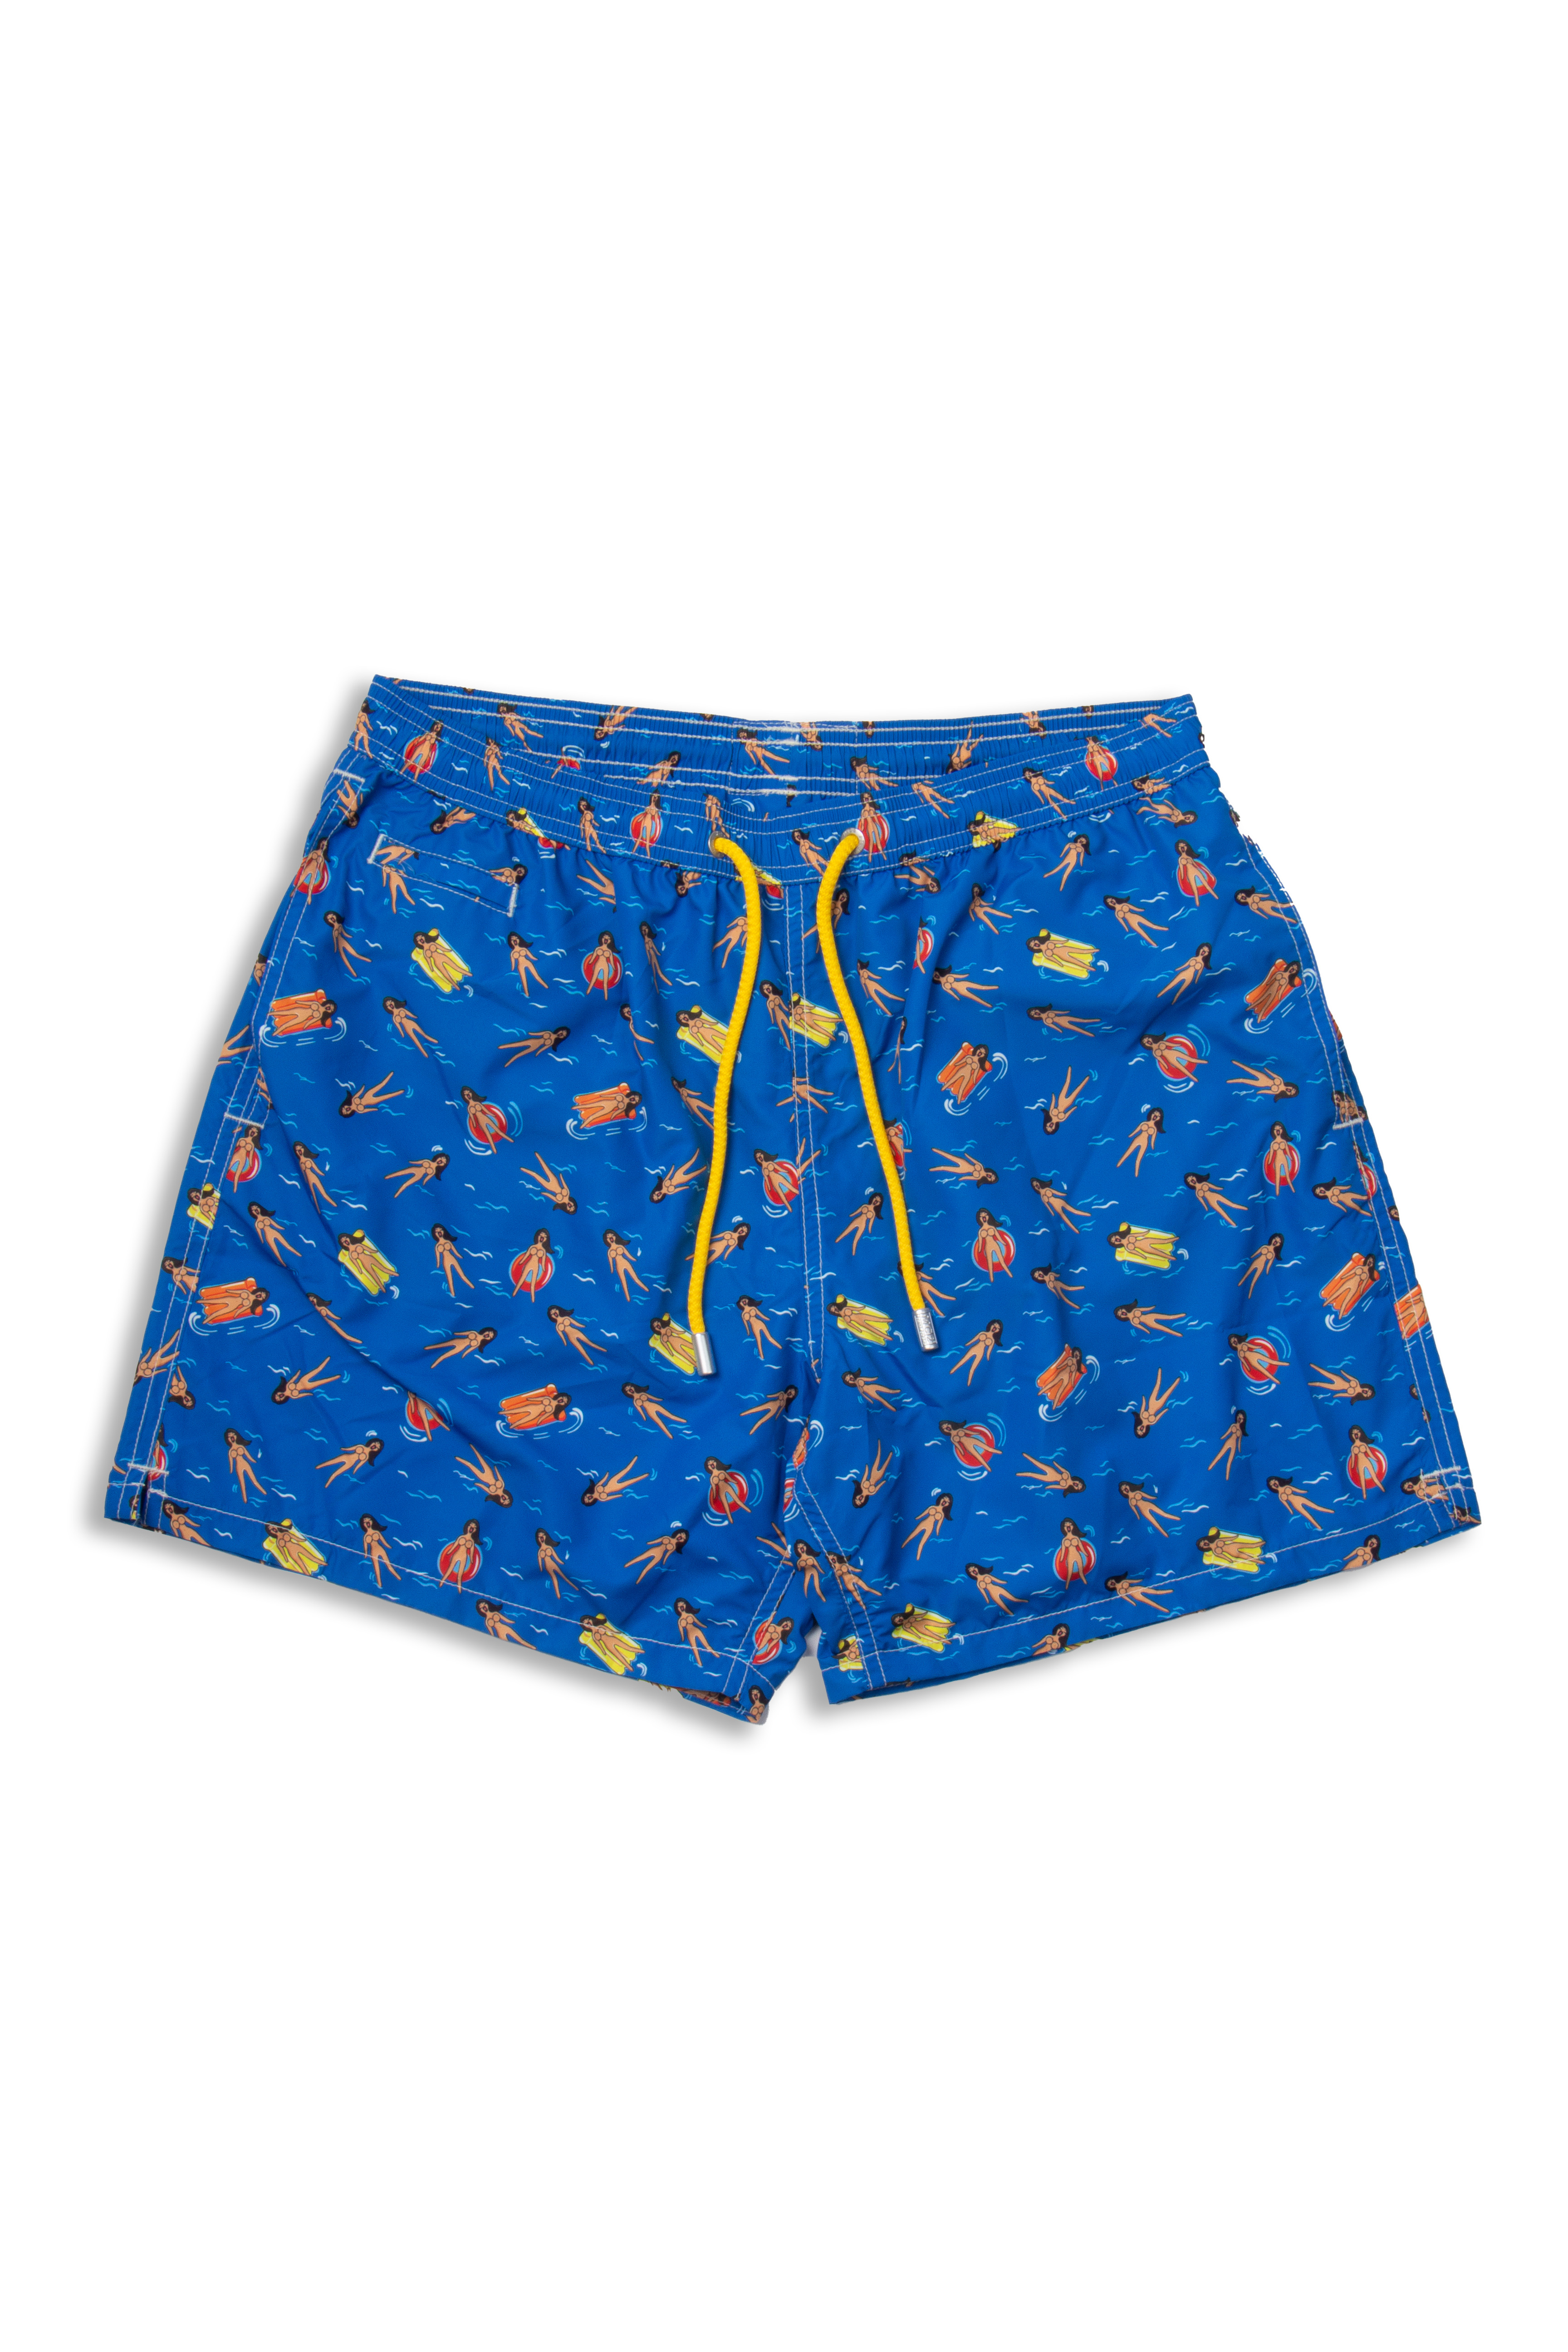 MC2 SAINT BARTH Swim Shorts | Swim Shorts | Beachwear | Underwear ...